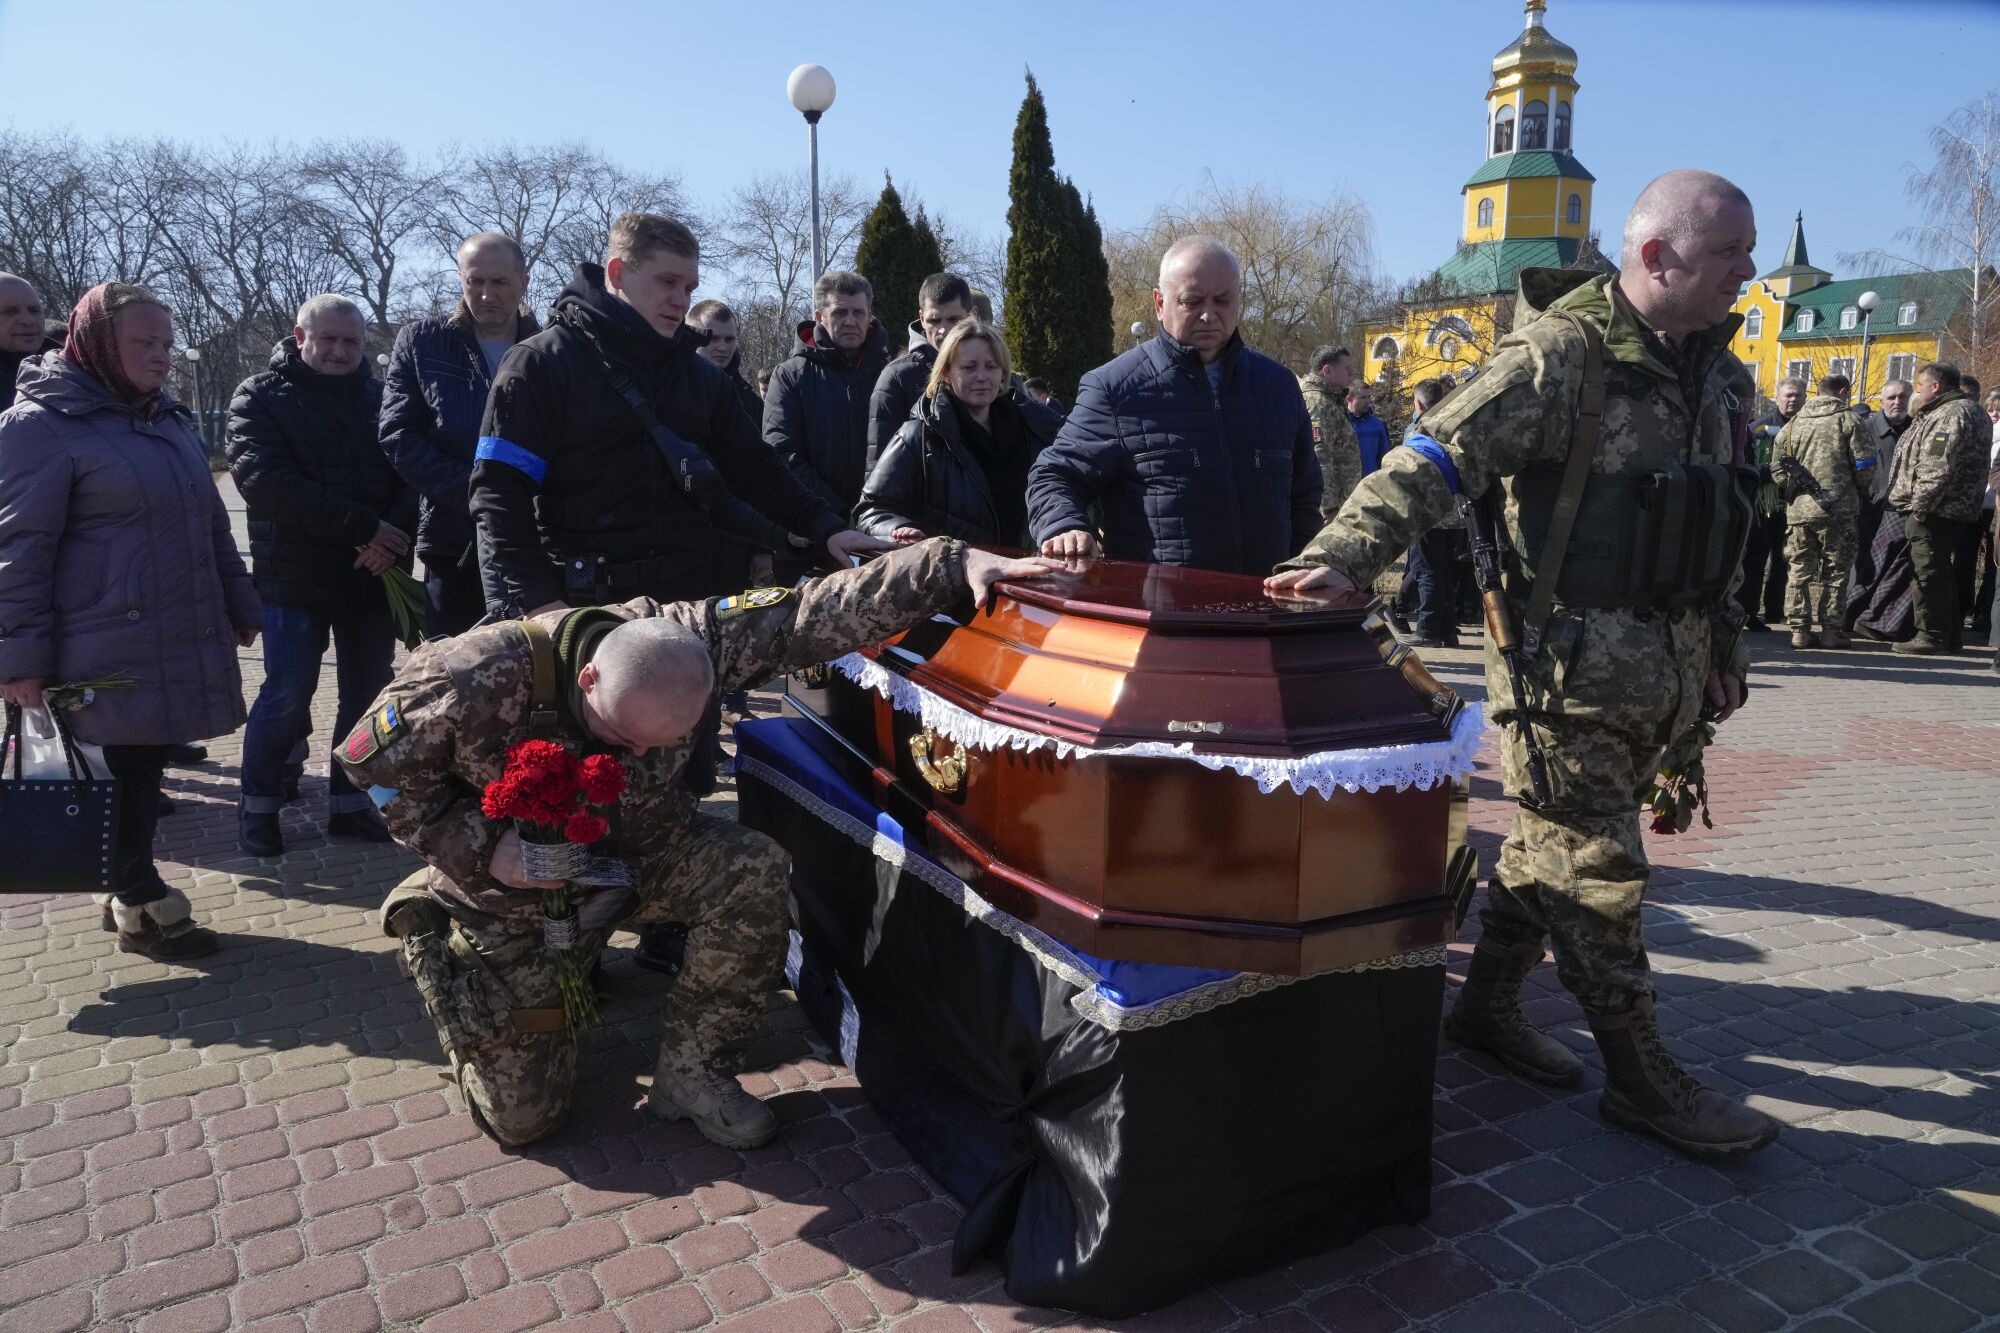 A Ukrainian soldier prays by a casket.